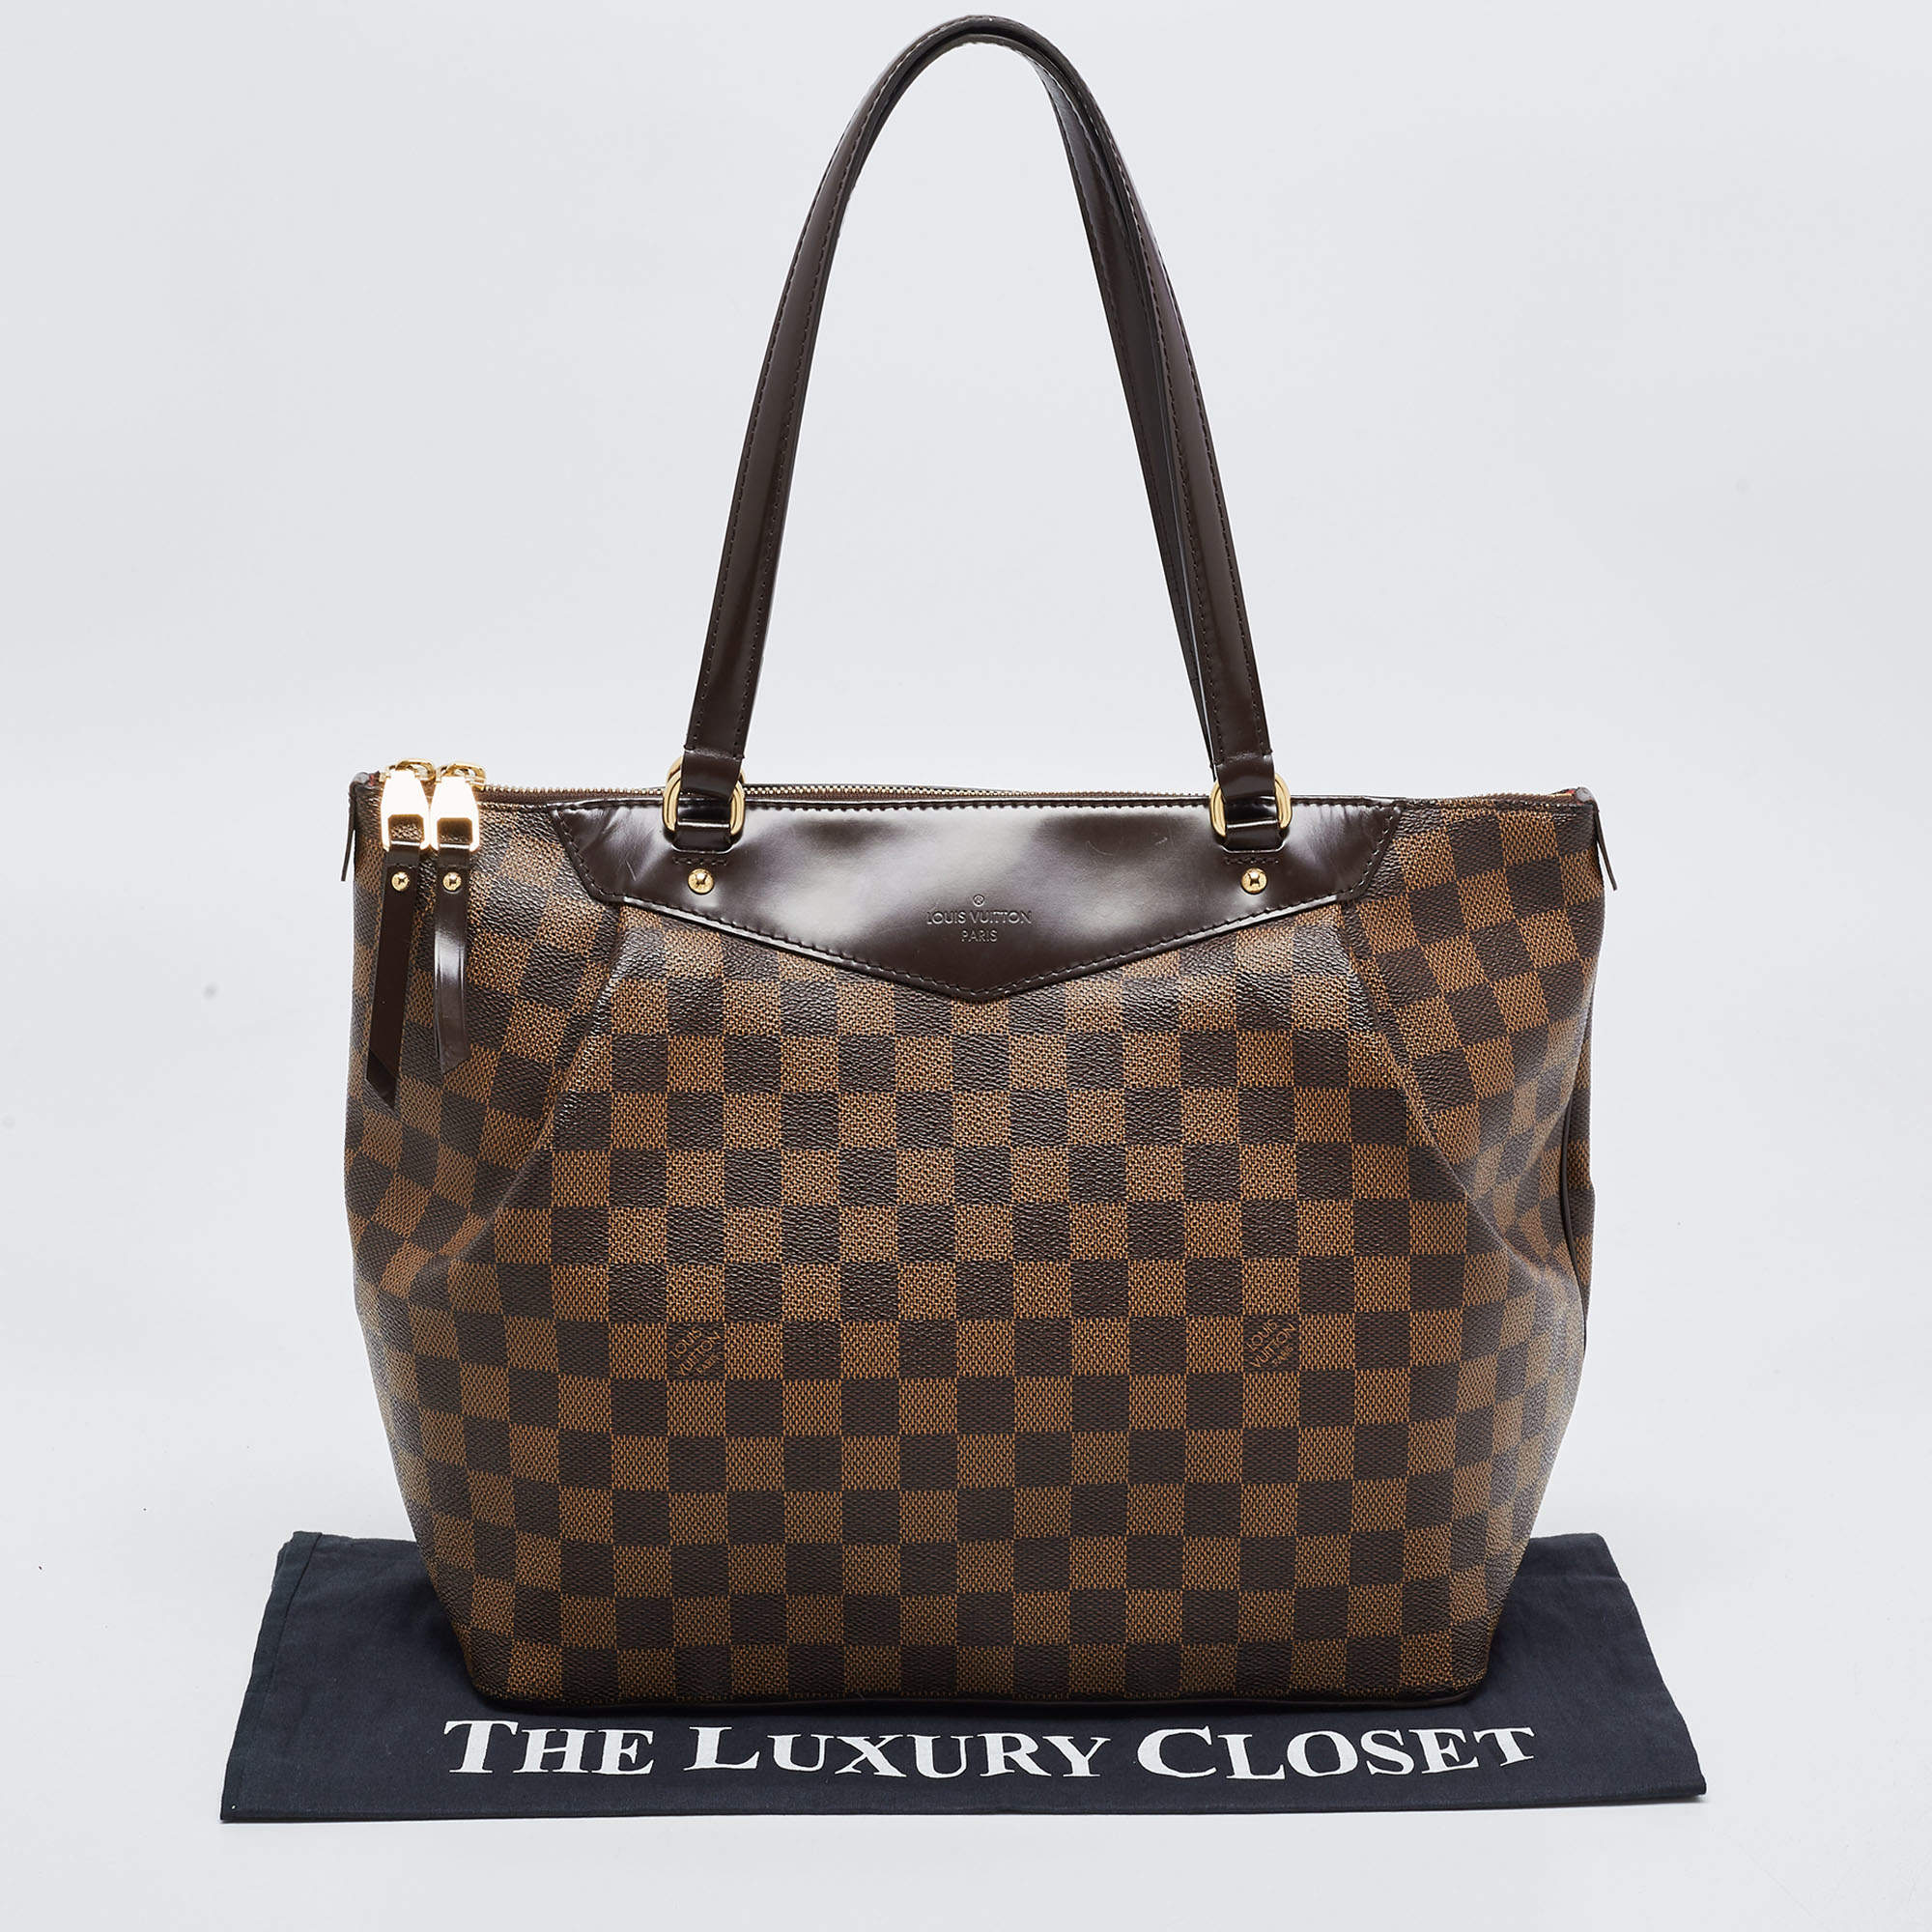 [Japan Used Bag] Used Louis Vuitton Shoulder Bag/Pvc/Red/Plain Bag